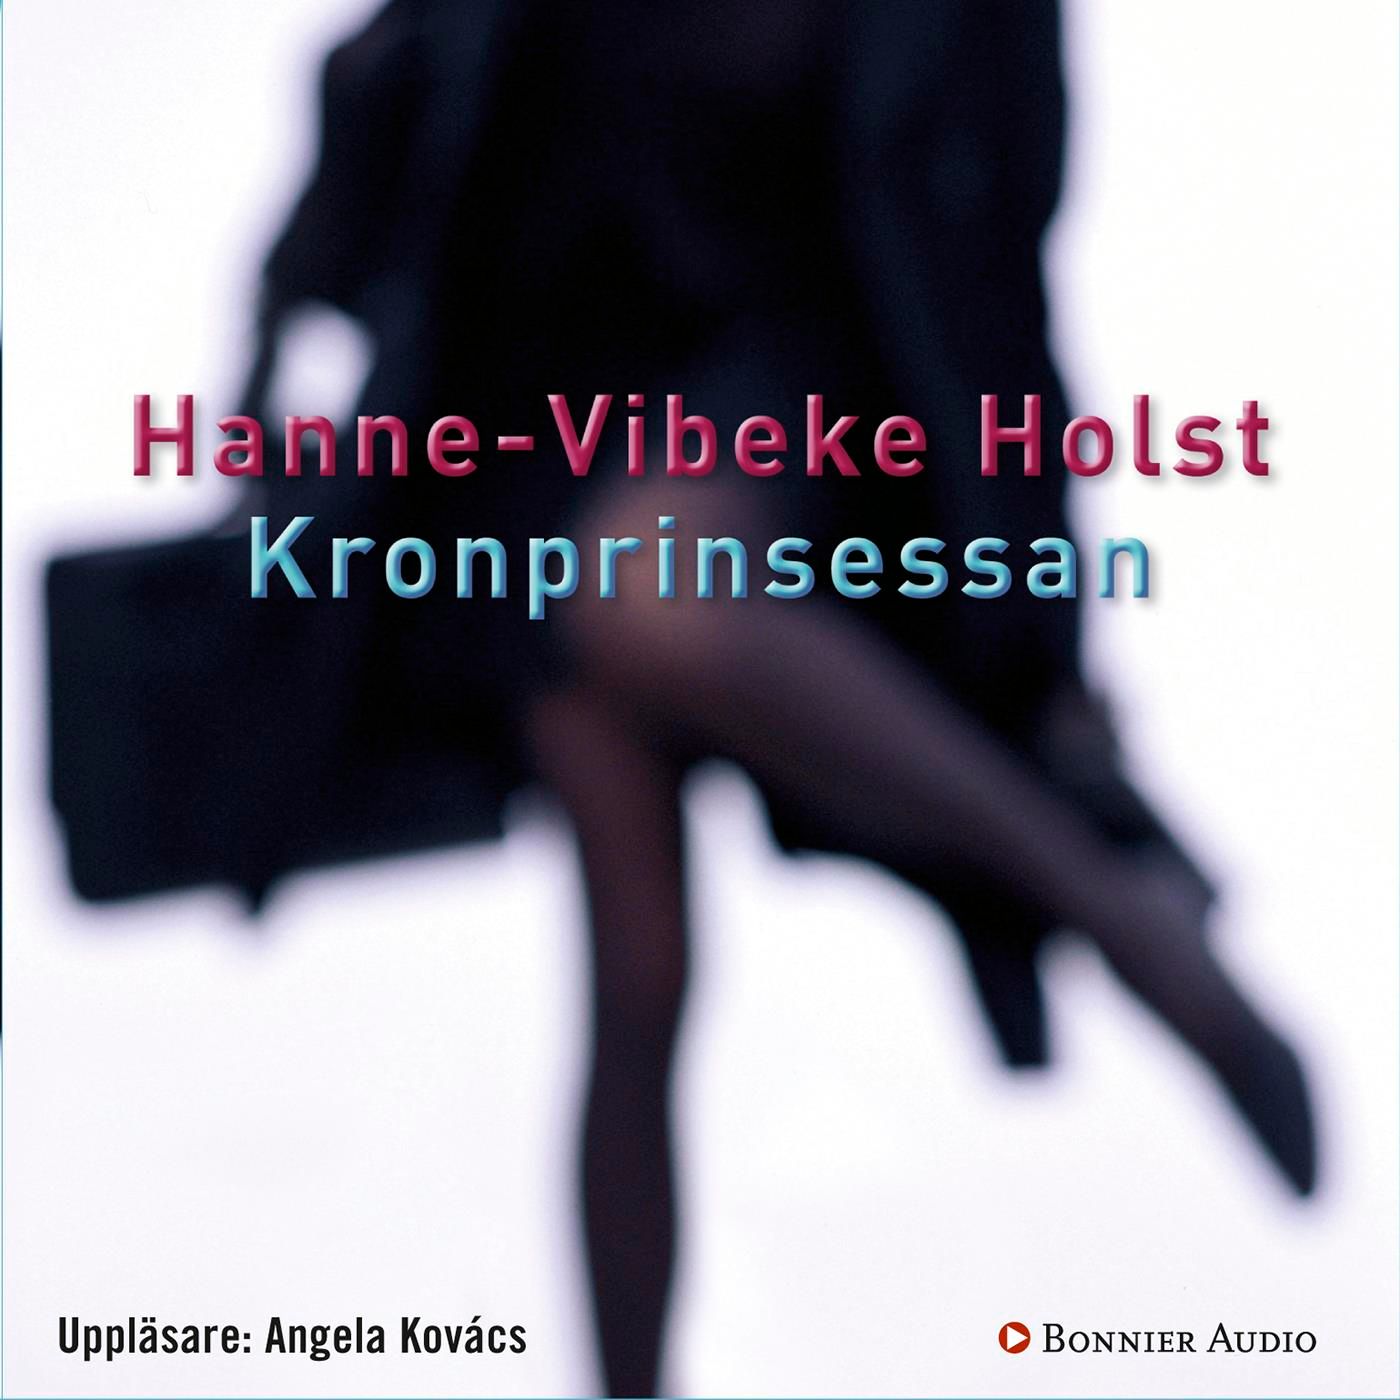 Kronprinsessan, ljudbok av Hanne-Vibeke Holst